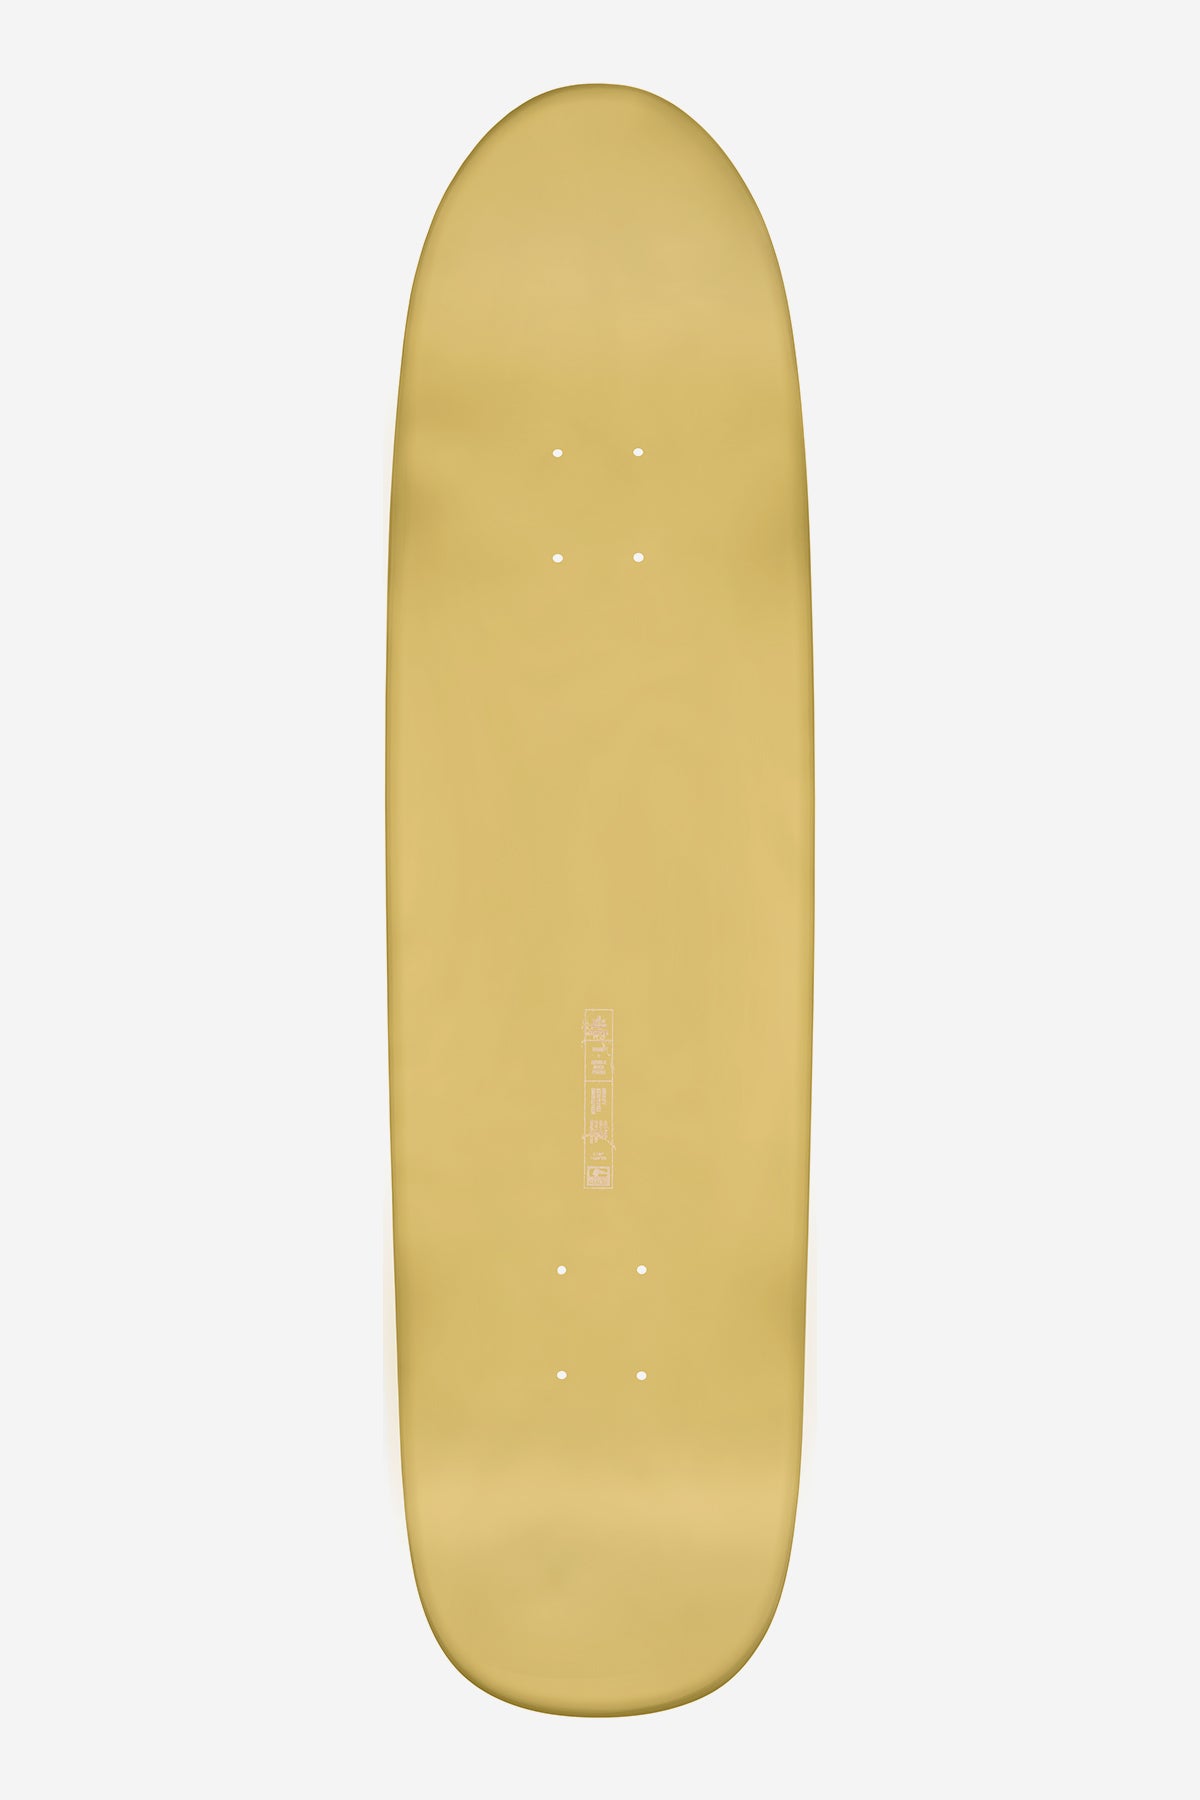 Globe - Shooter - Yellow/Comehell - 8.625" Skateboard Deck